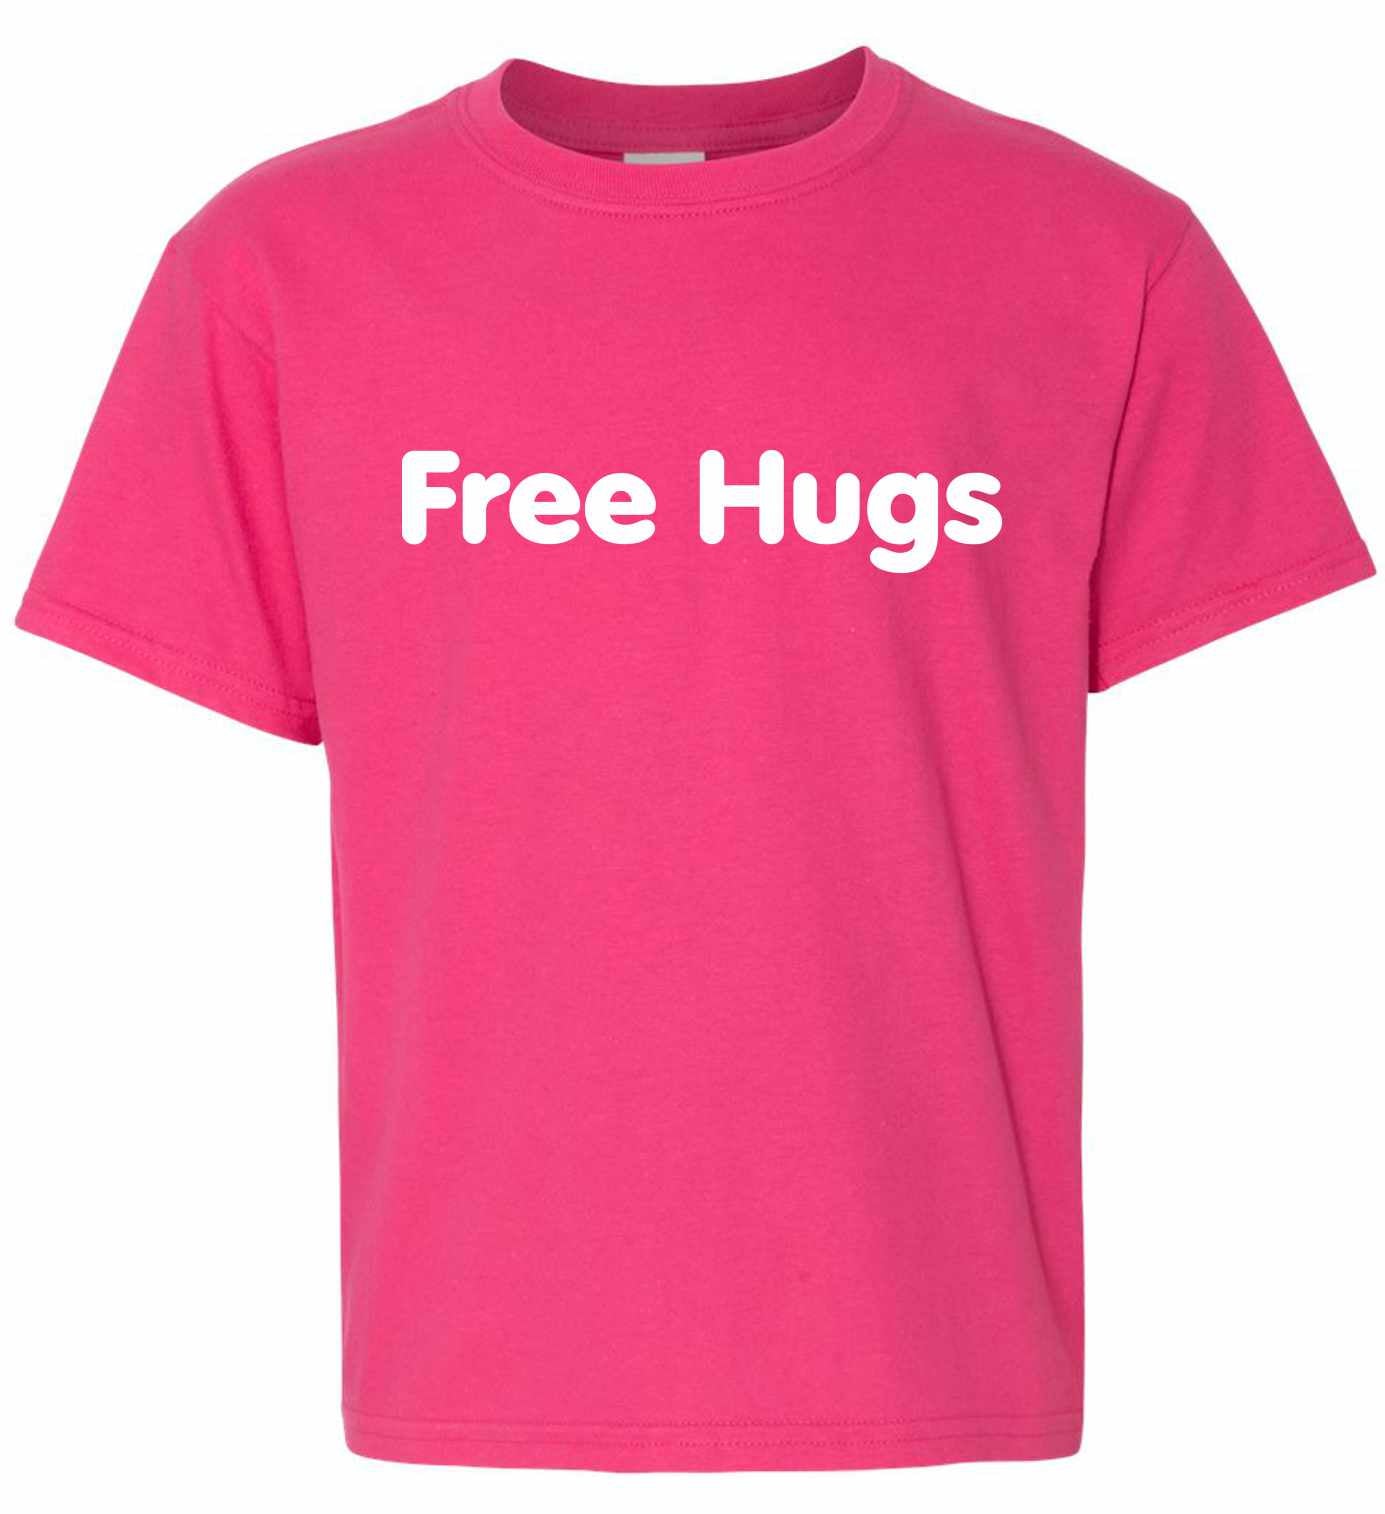 Free Hugs on Kids T-Shirt (#626-201)